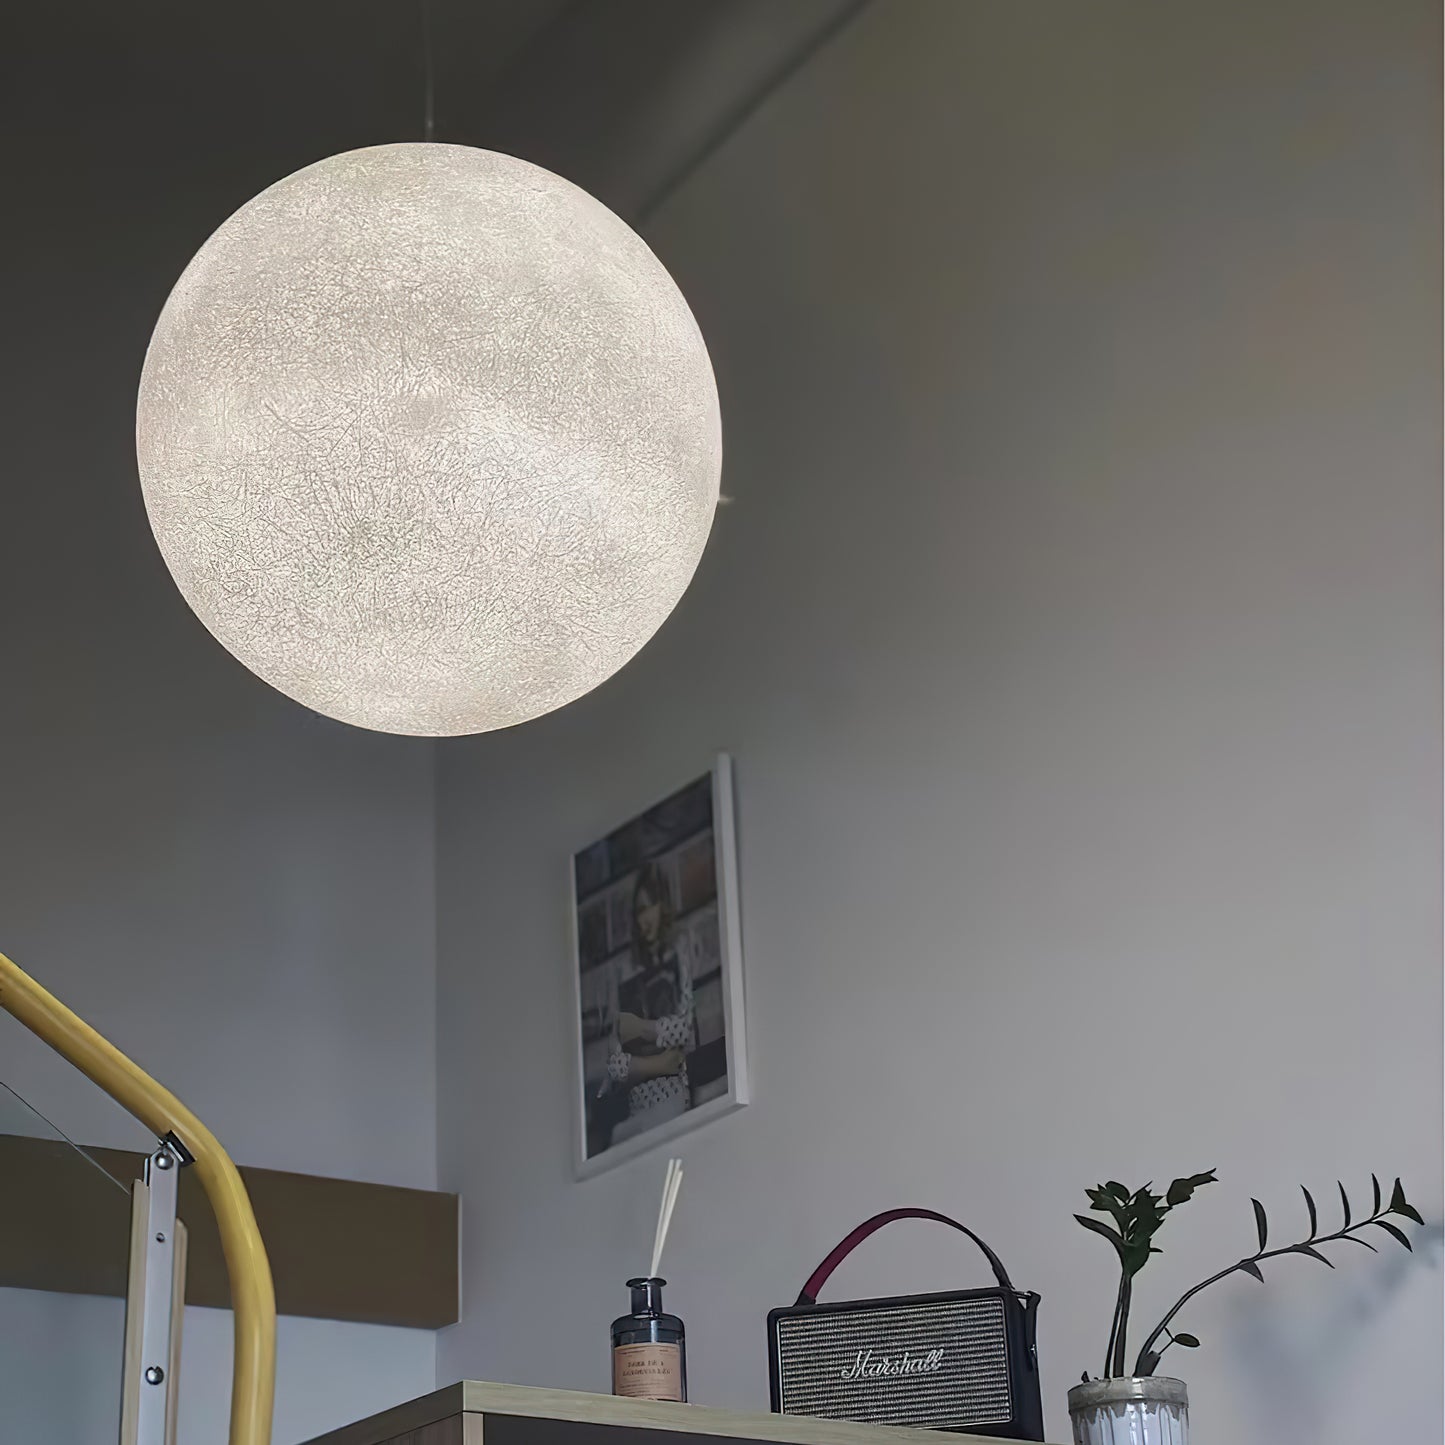 Moon Pendant lamp